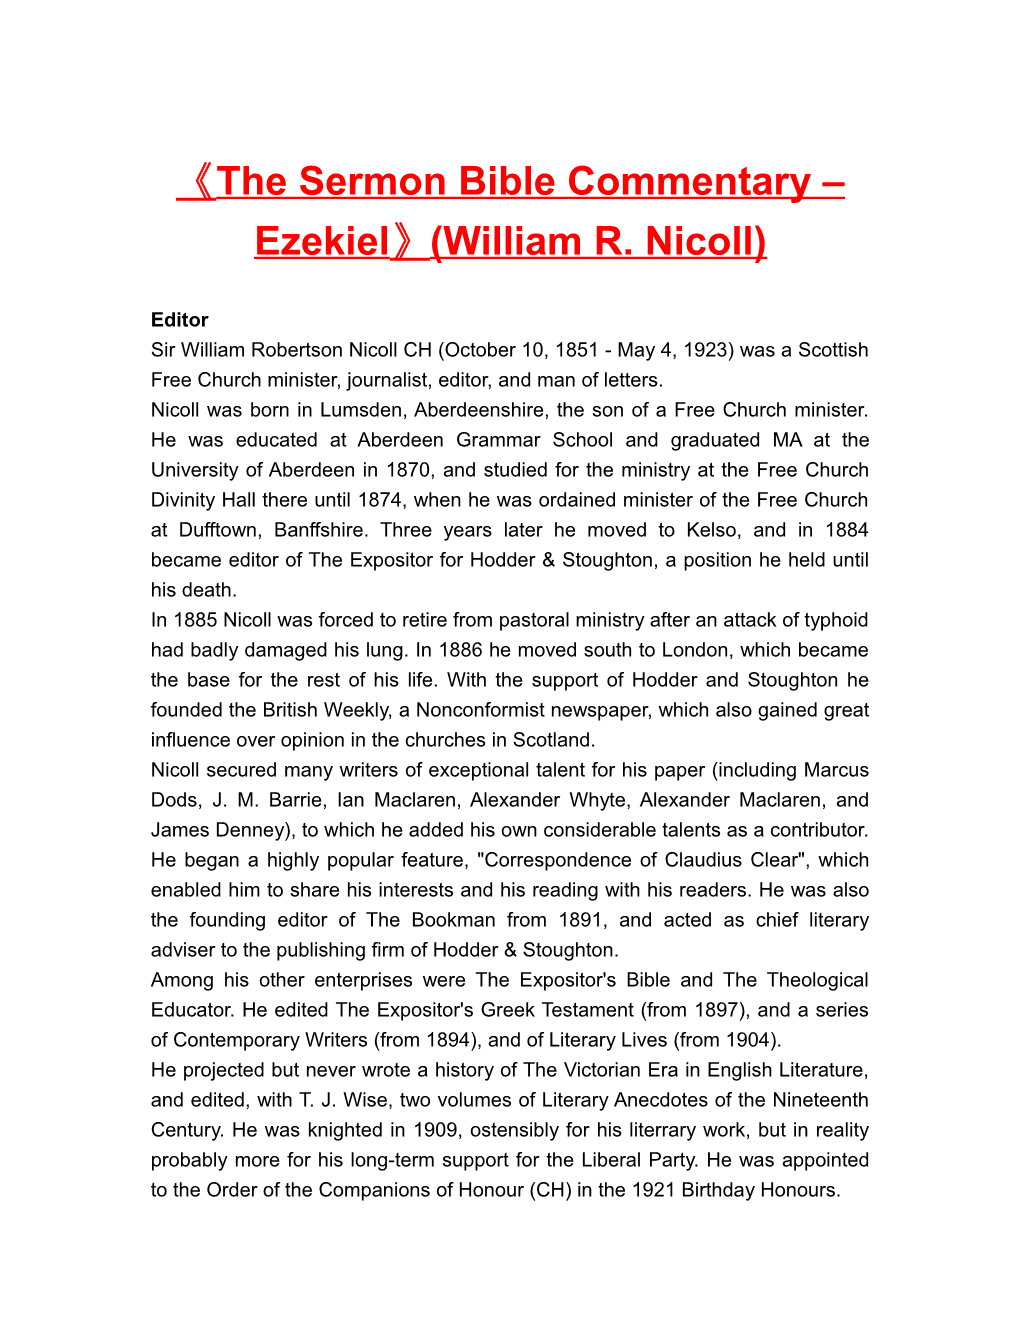 The Sermon Bible Commentary Ezekiel (William R. Nicoll)